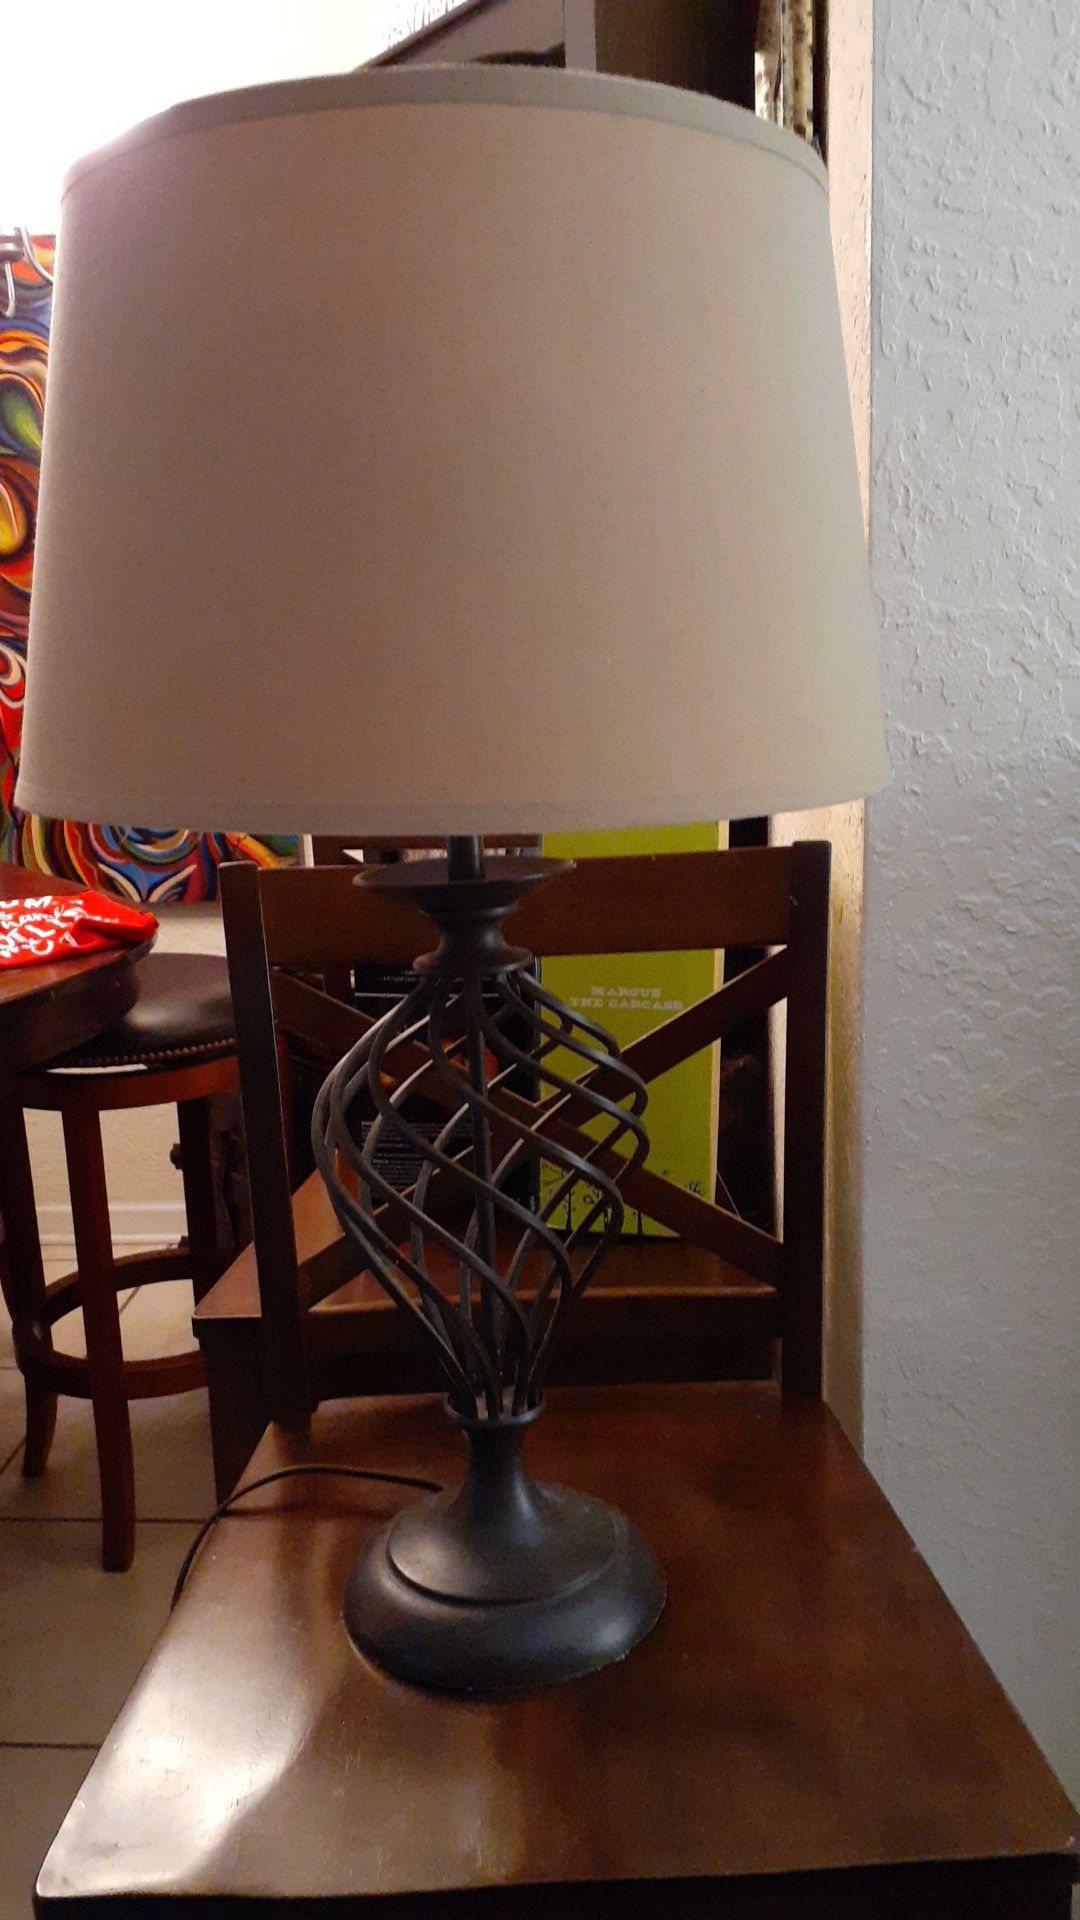 Lamp with lamp shade